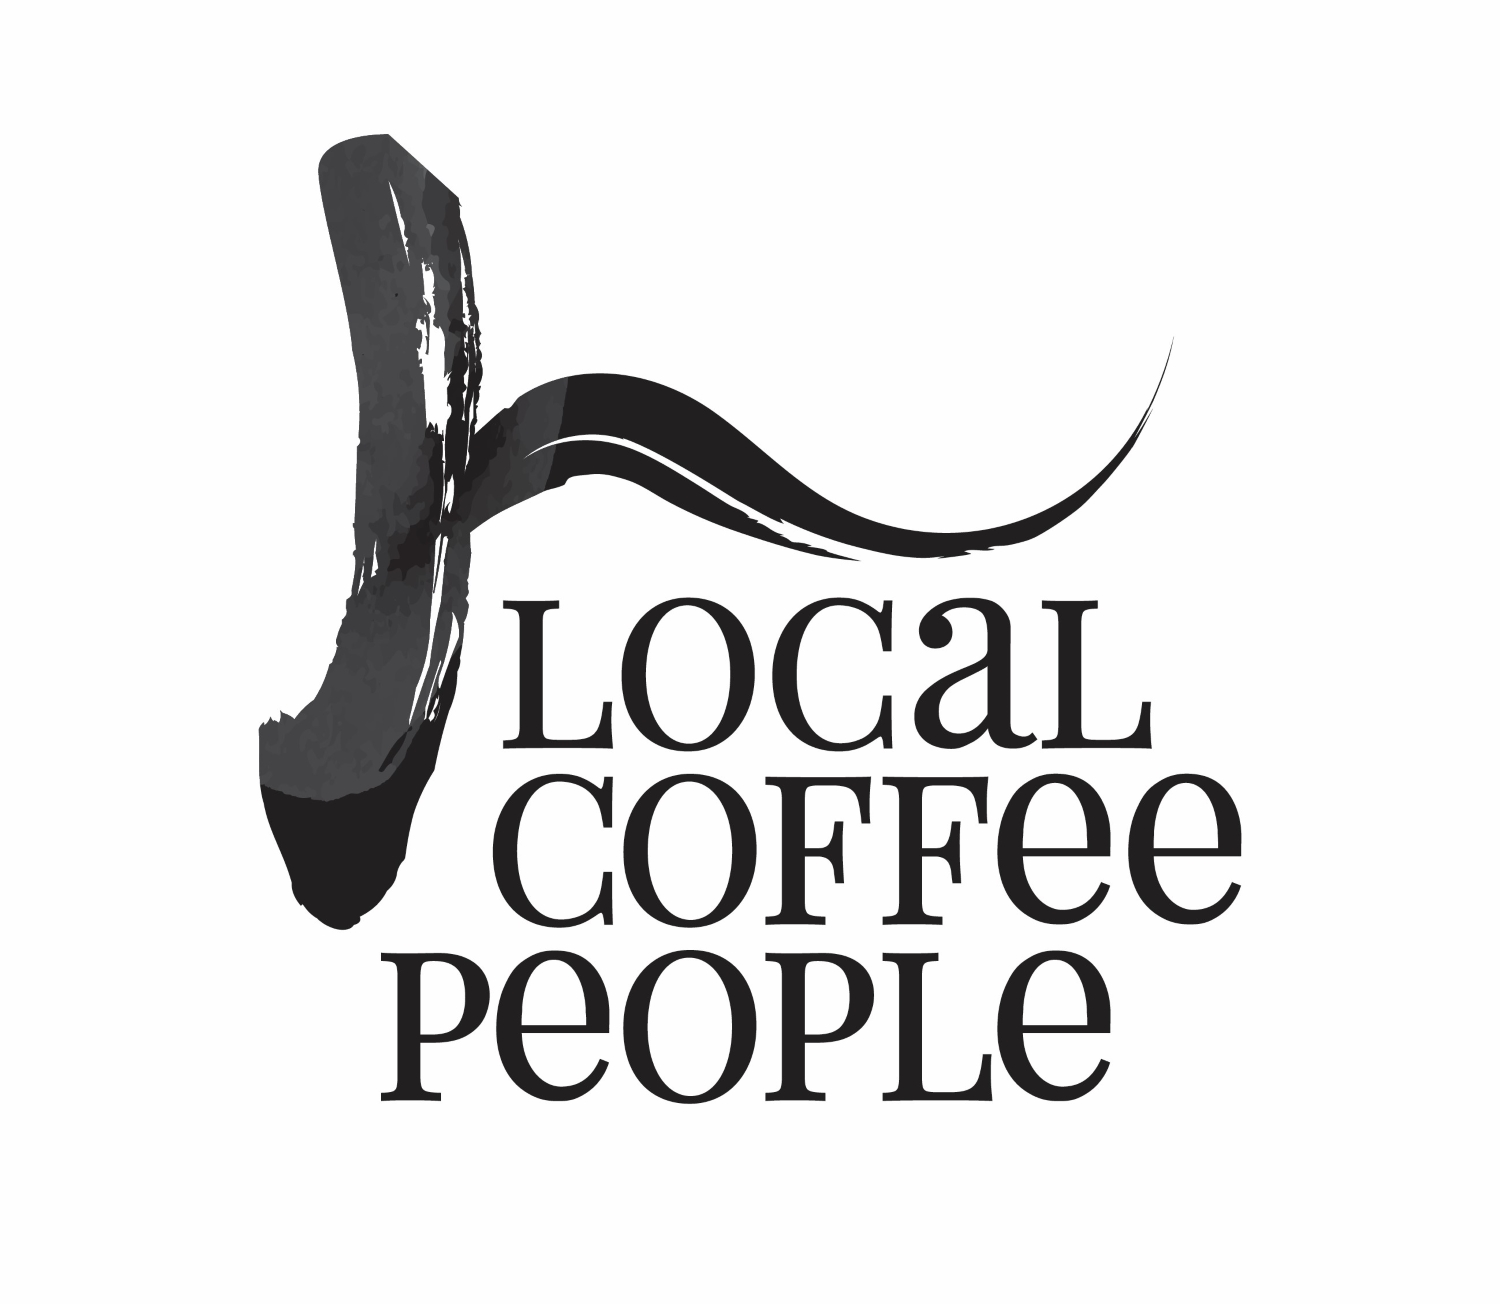 LOCAL COFFEE PEOPLE